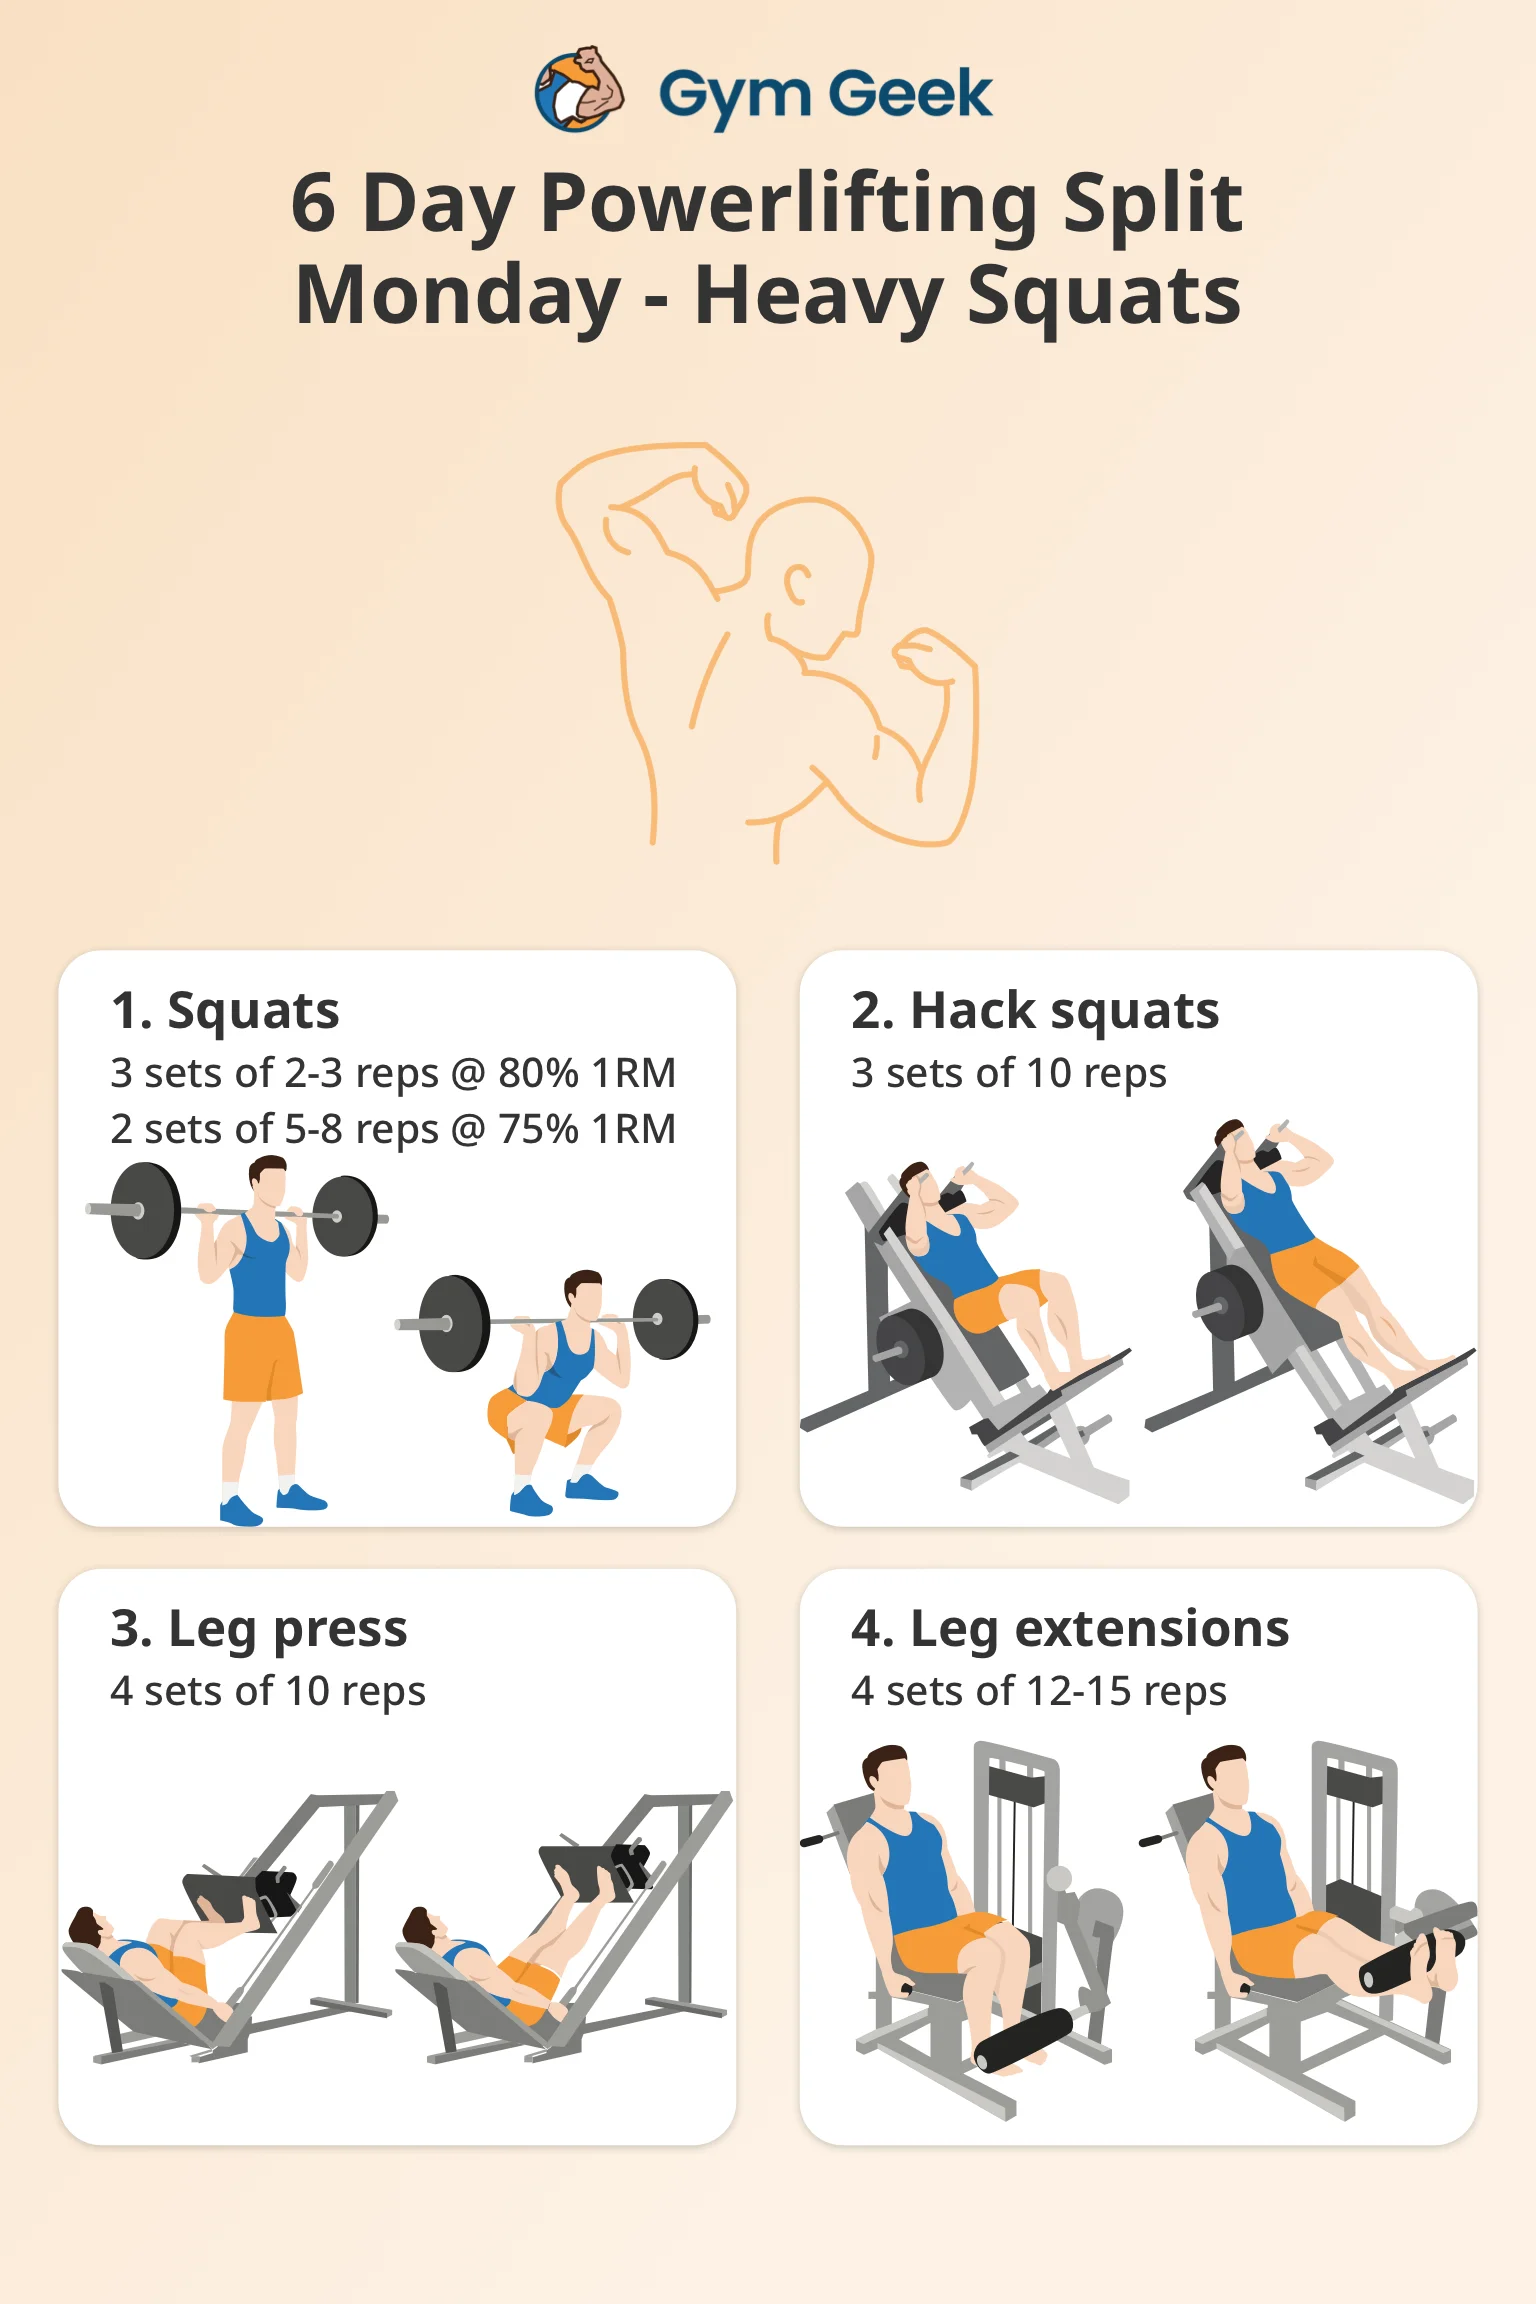 infographic - 6 day powerlifting program - Monday - Heavy Squats